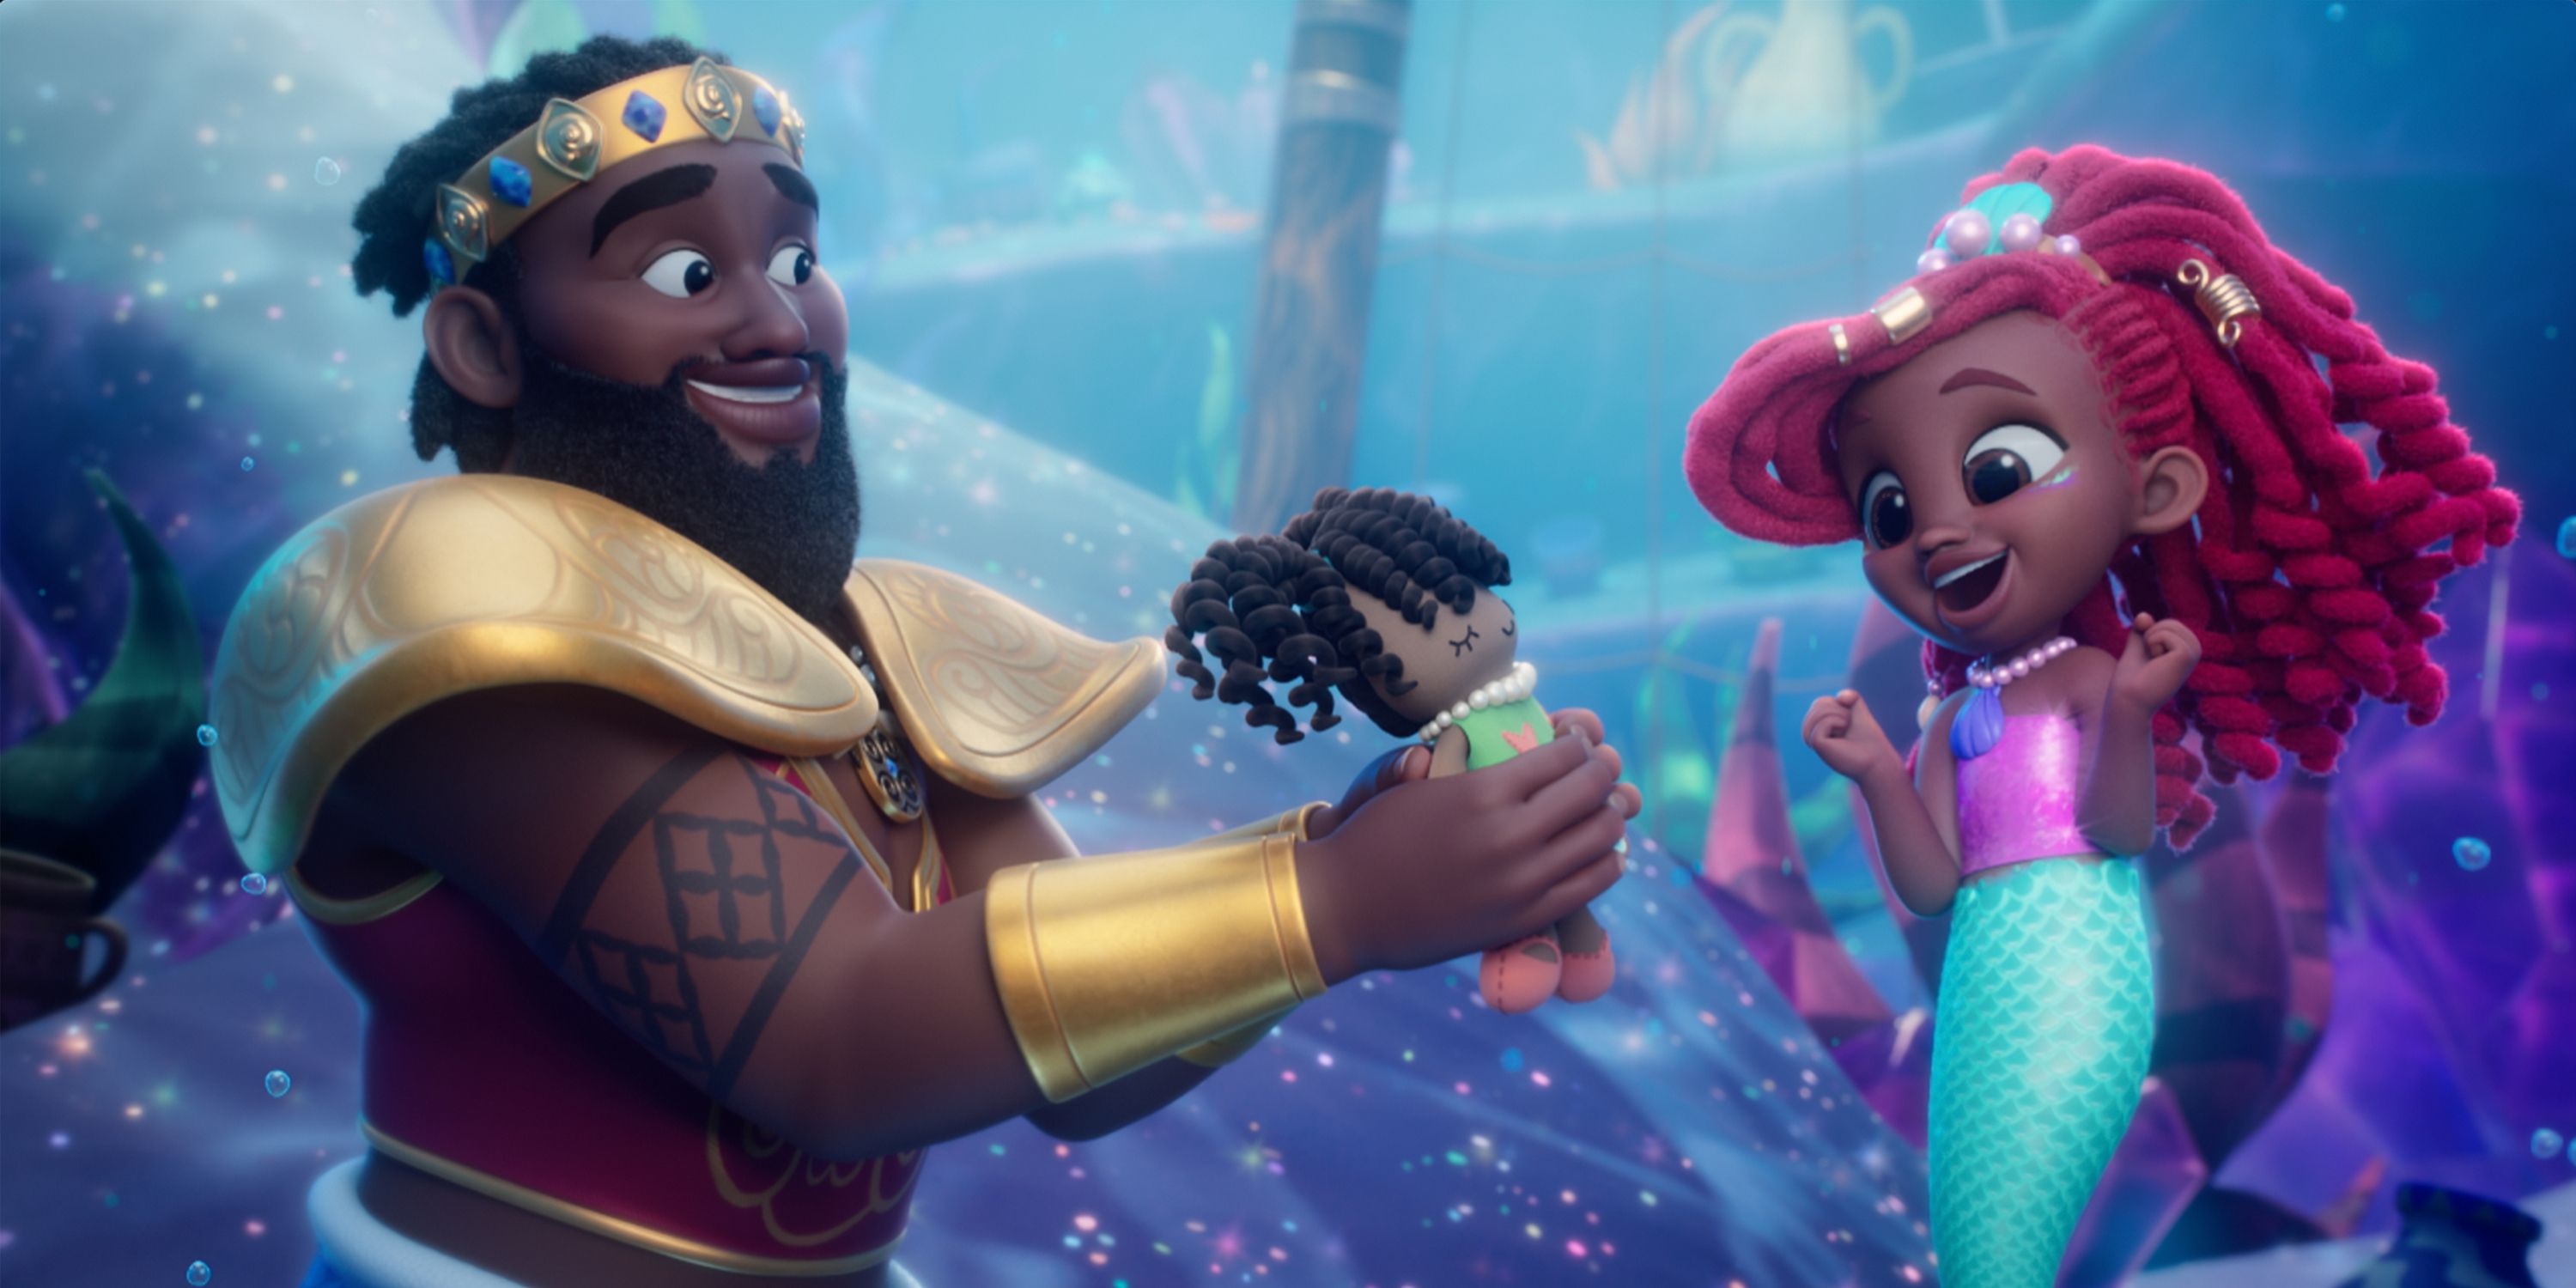 Triton gives Ariel a gift in Disney Junior's Ariel.